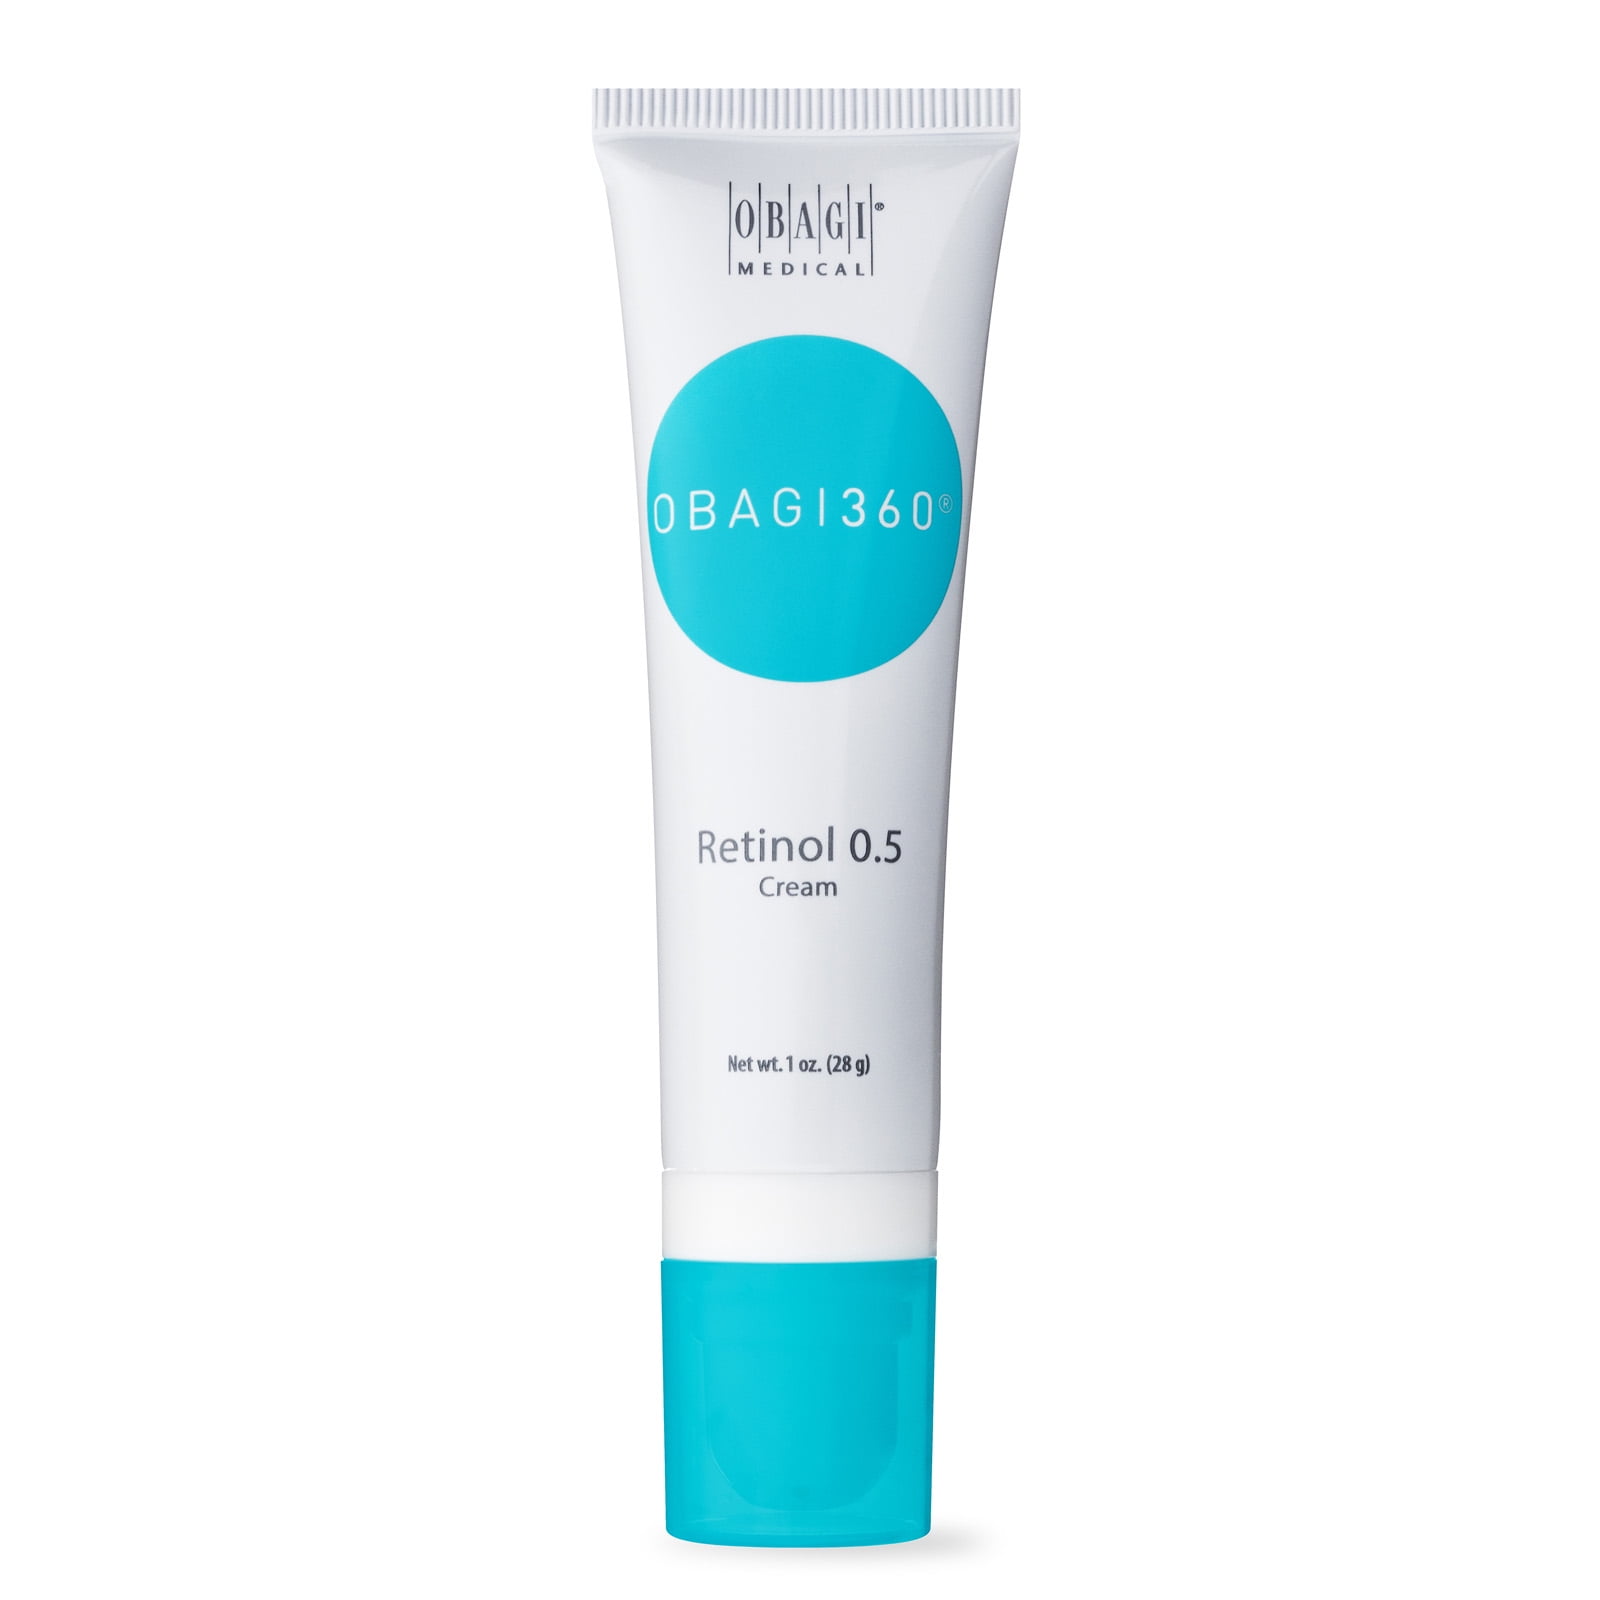 Obagi360 Retinol Facial Cream 0.5, 1 oz -